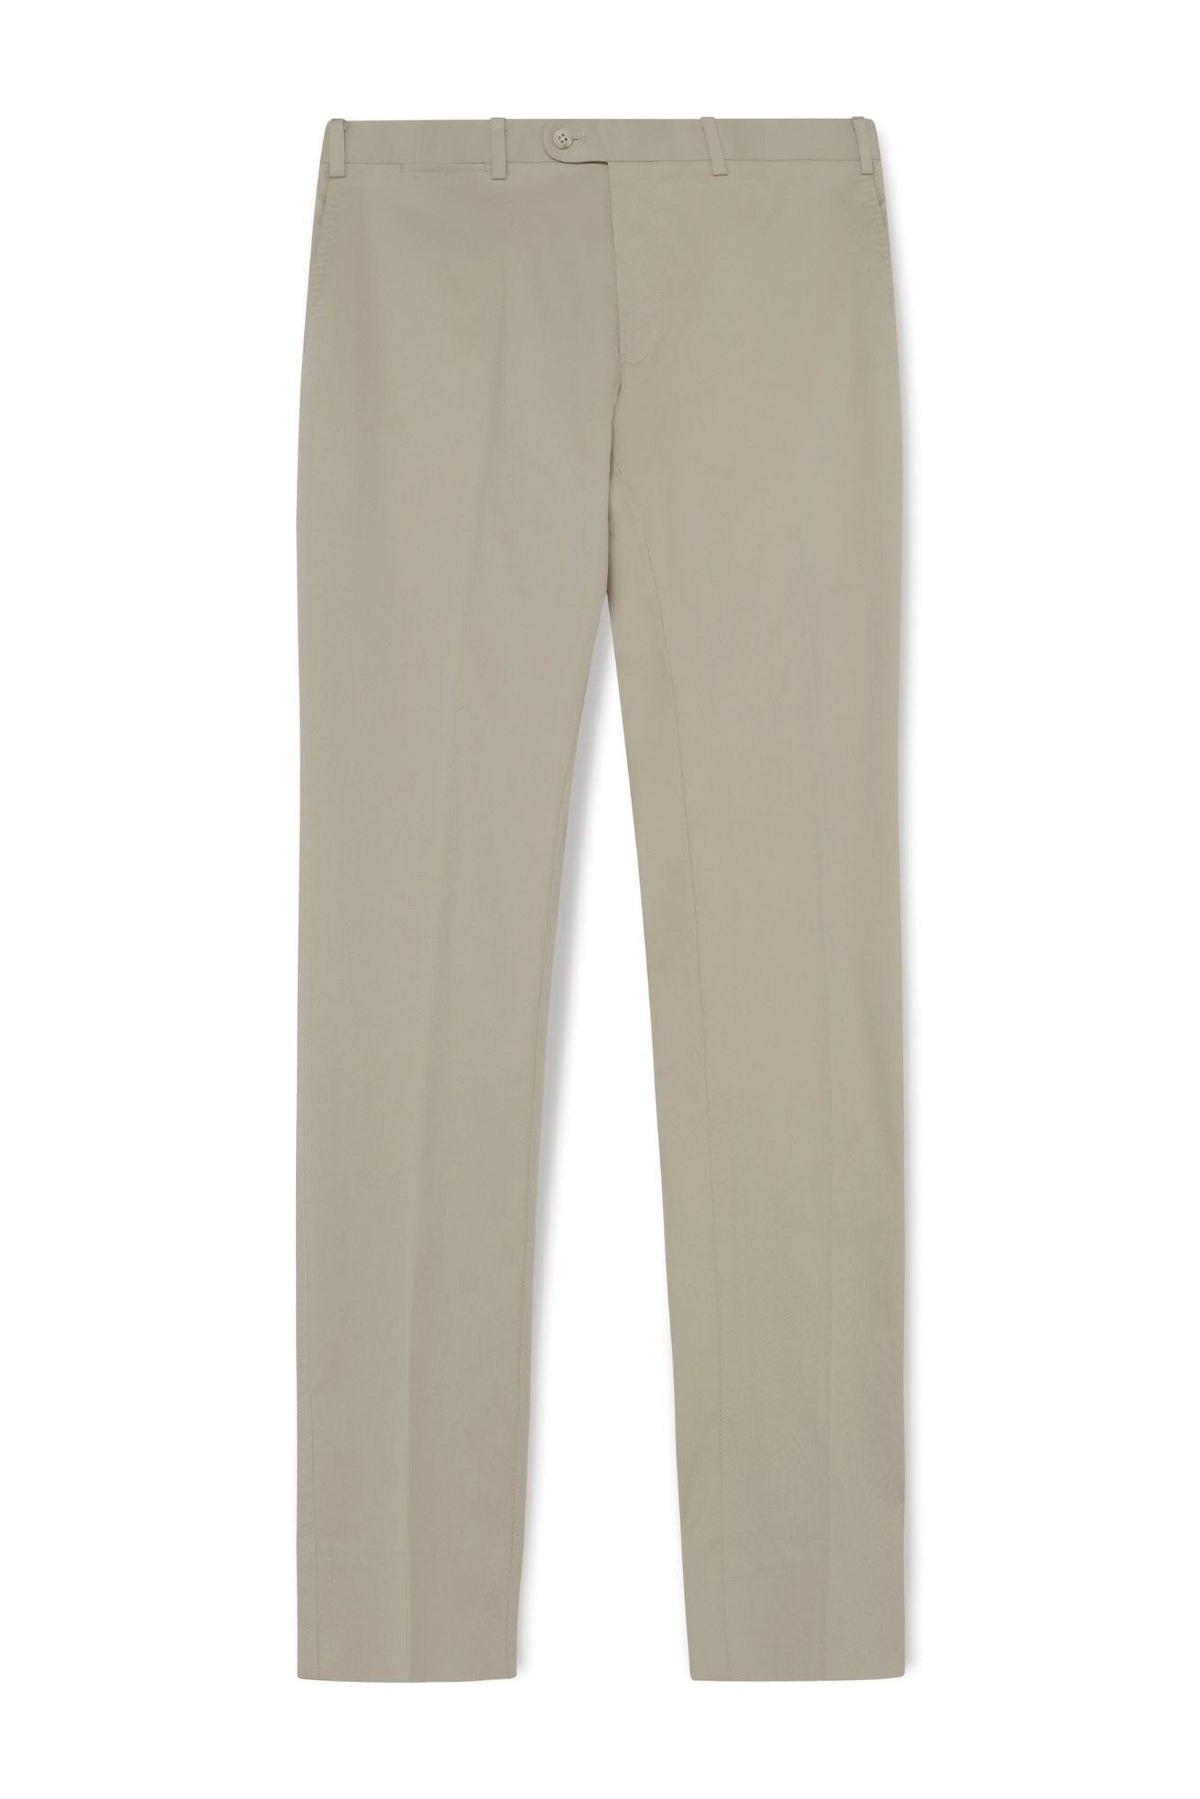 CGC Tailored Pants - Sand Stretch Cotton